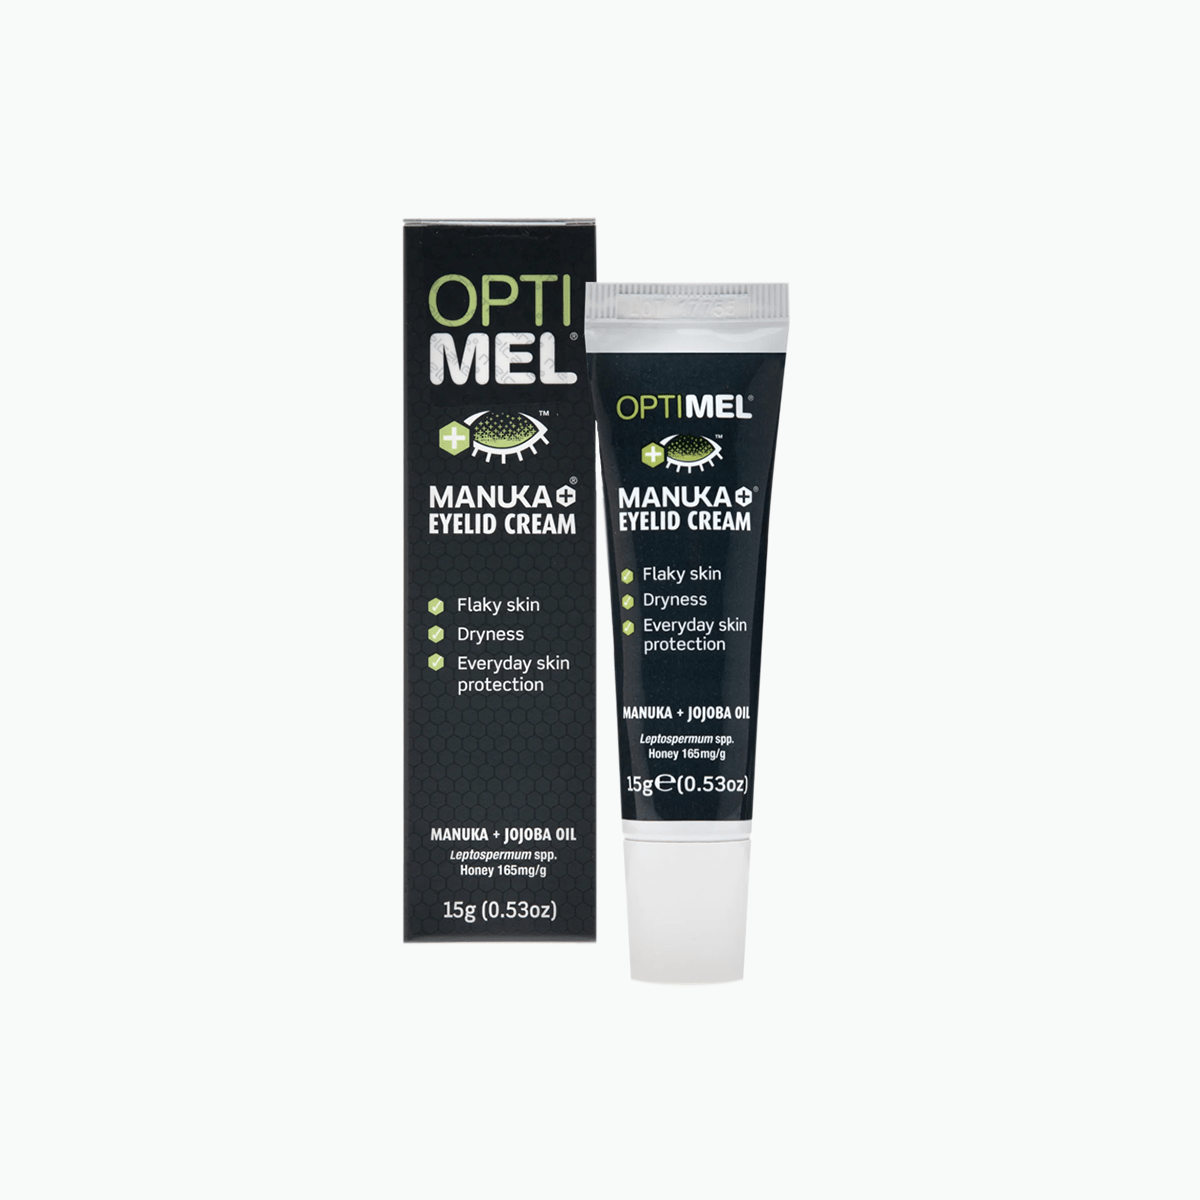 Optimel Manuka Eyelid Cream for Dry Flaky Skin, Conditioner (15g) - Dryeye Rescue